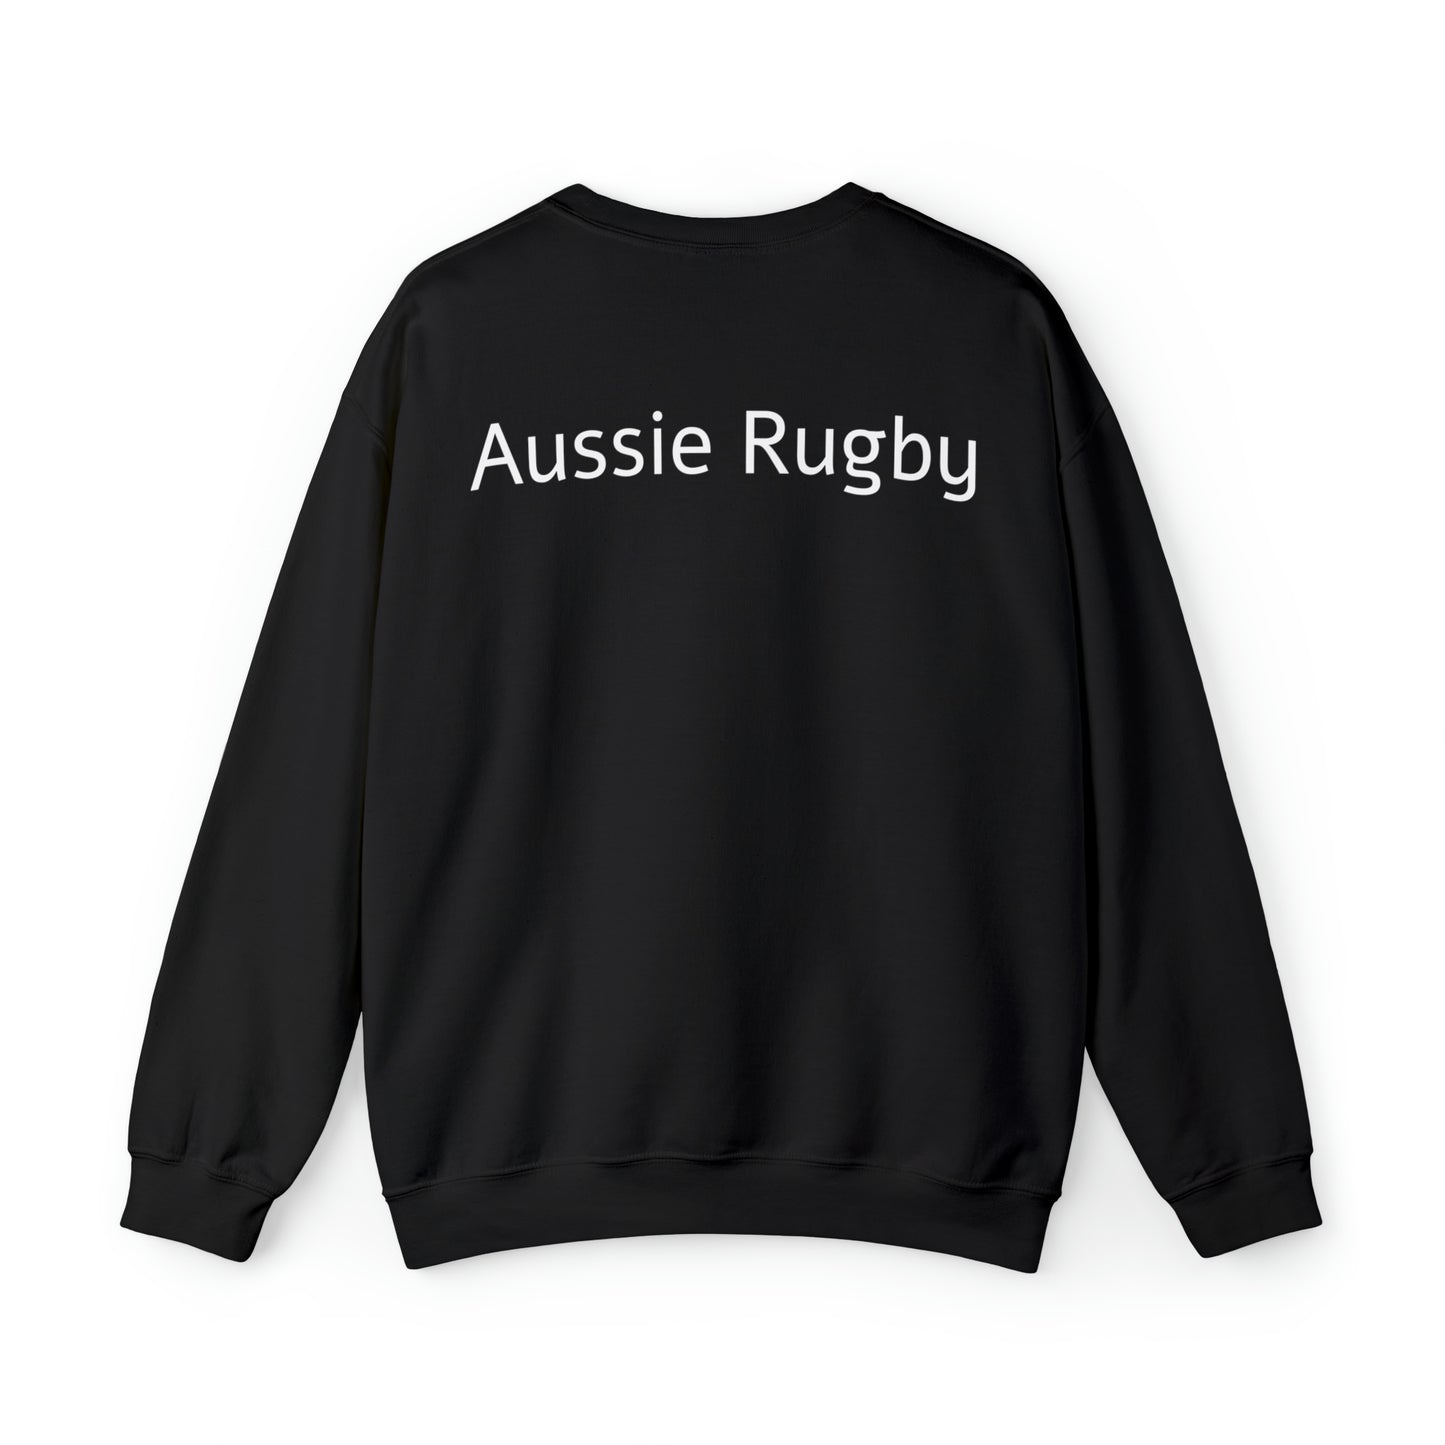 Australia celebrating with RWC - black sweatshirt